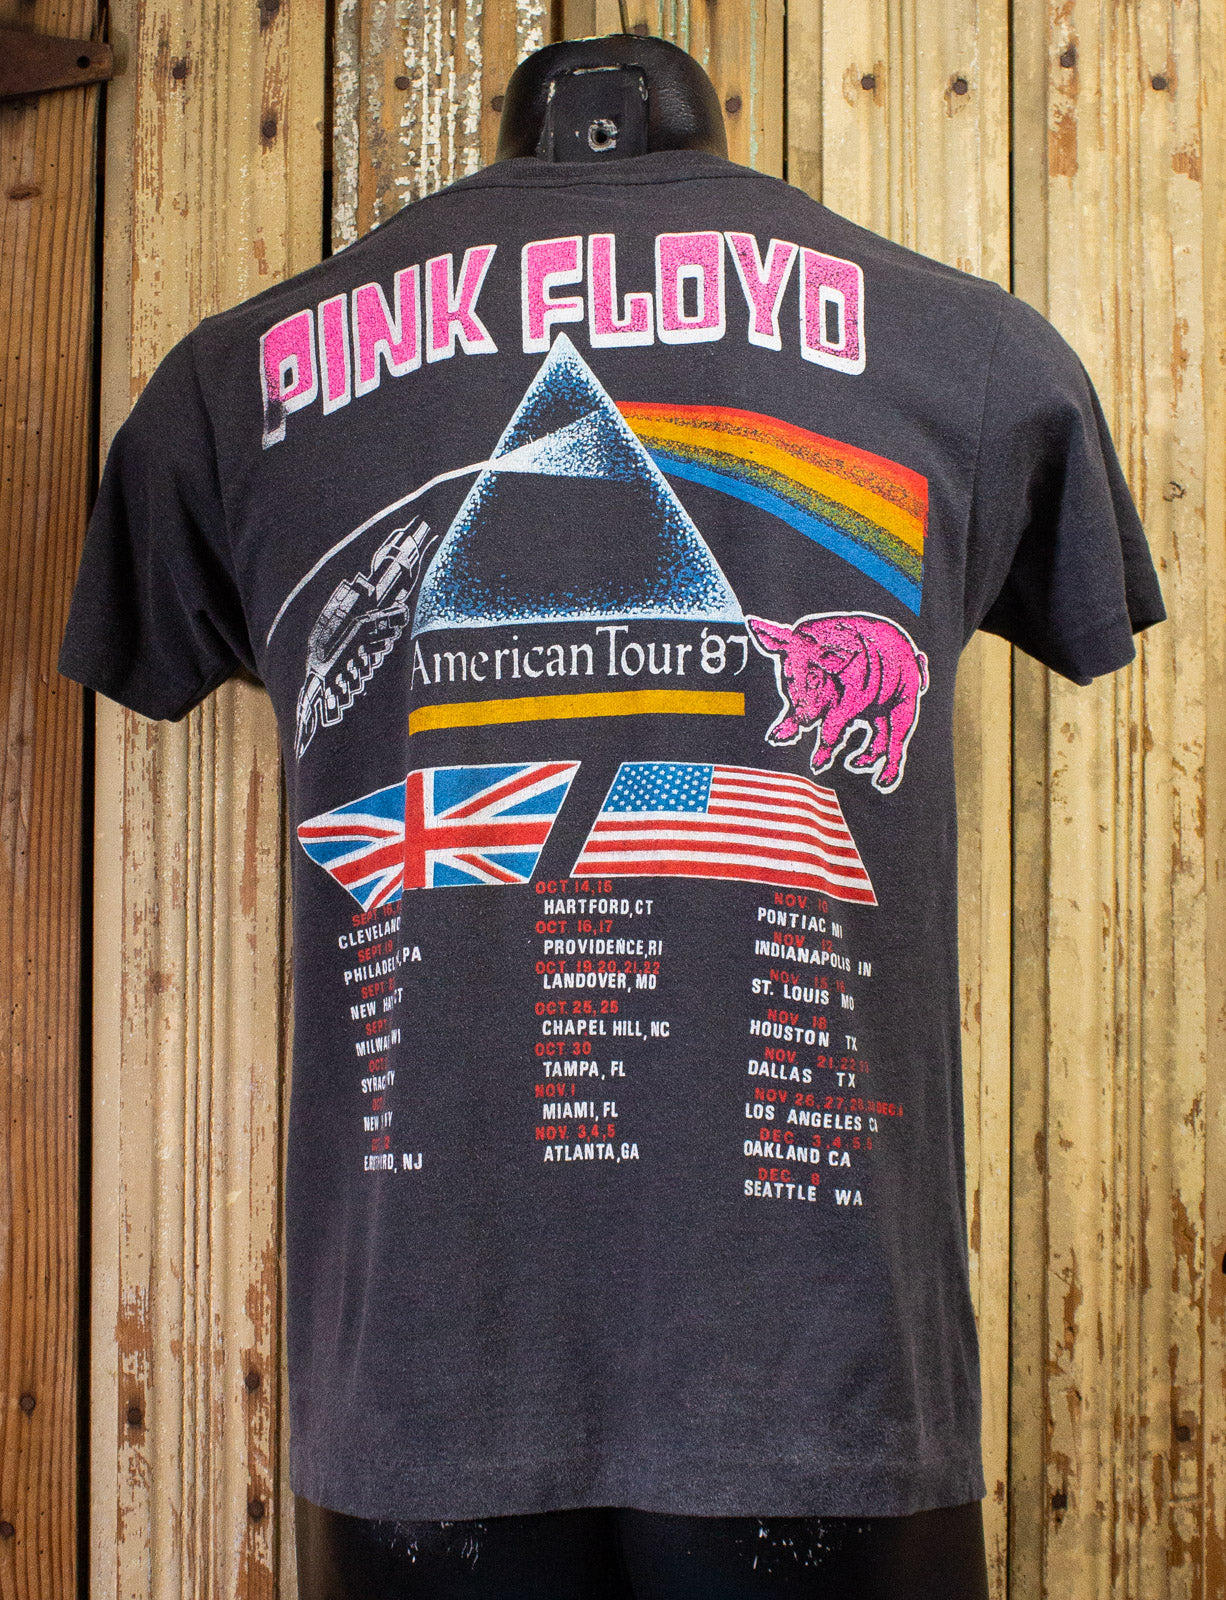 Vintage Pink Floyd A Momentary Lapse of Reason Concert T shirt 1987 Black Medium